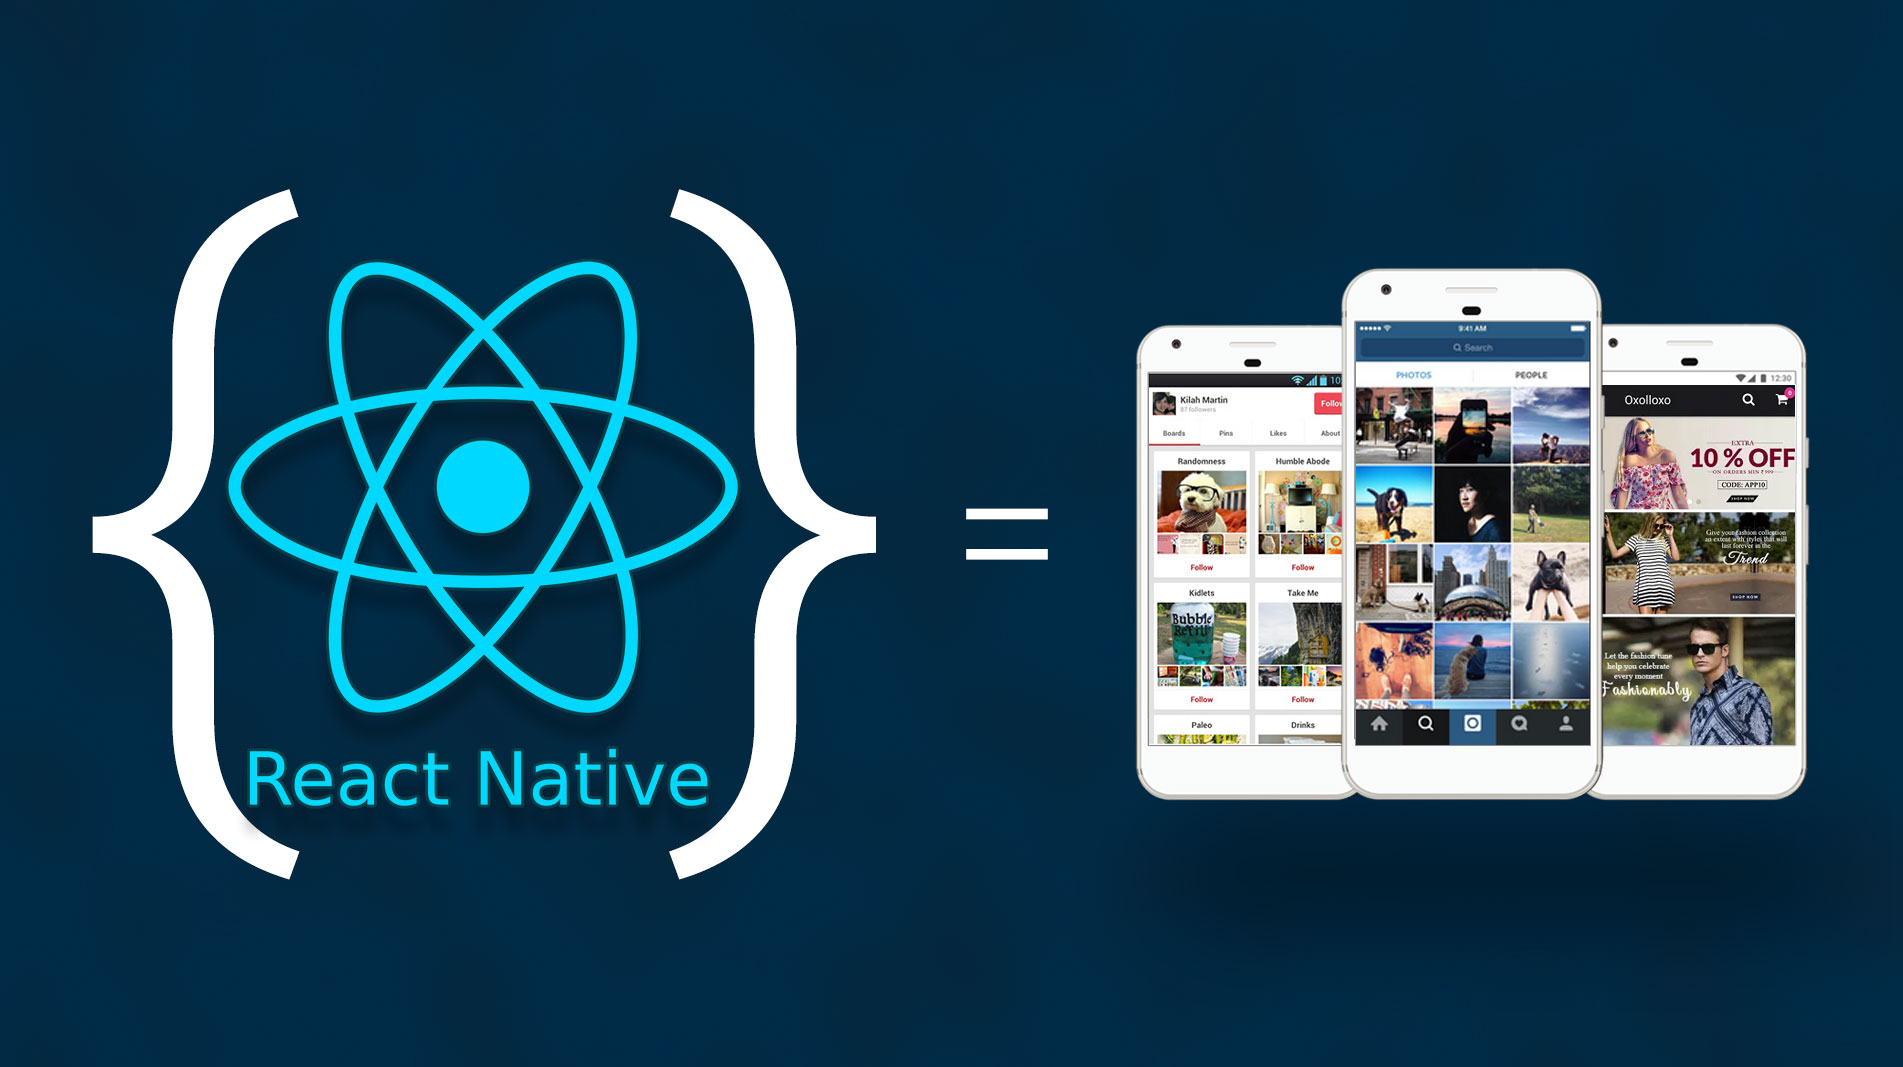 App Ideas Using React Native Technology